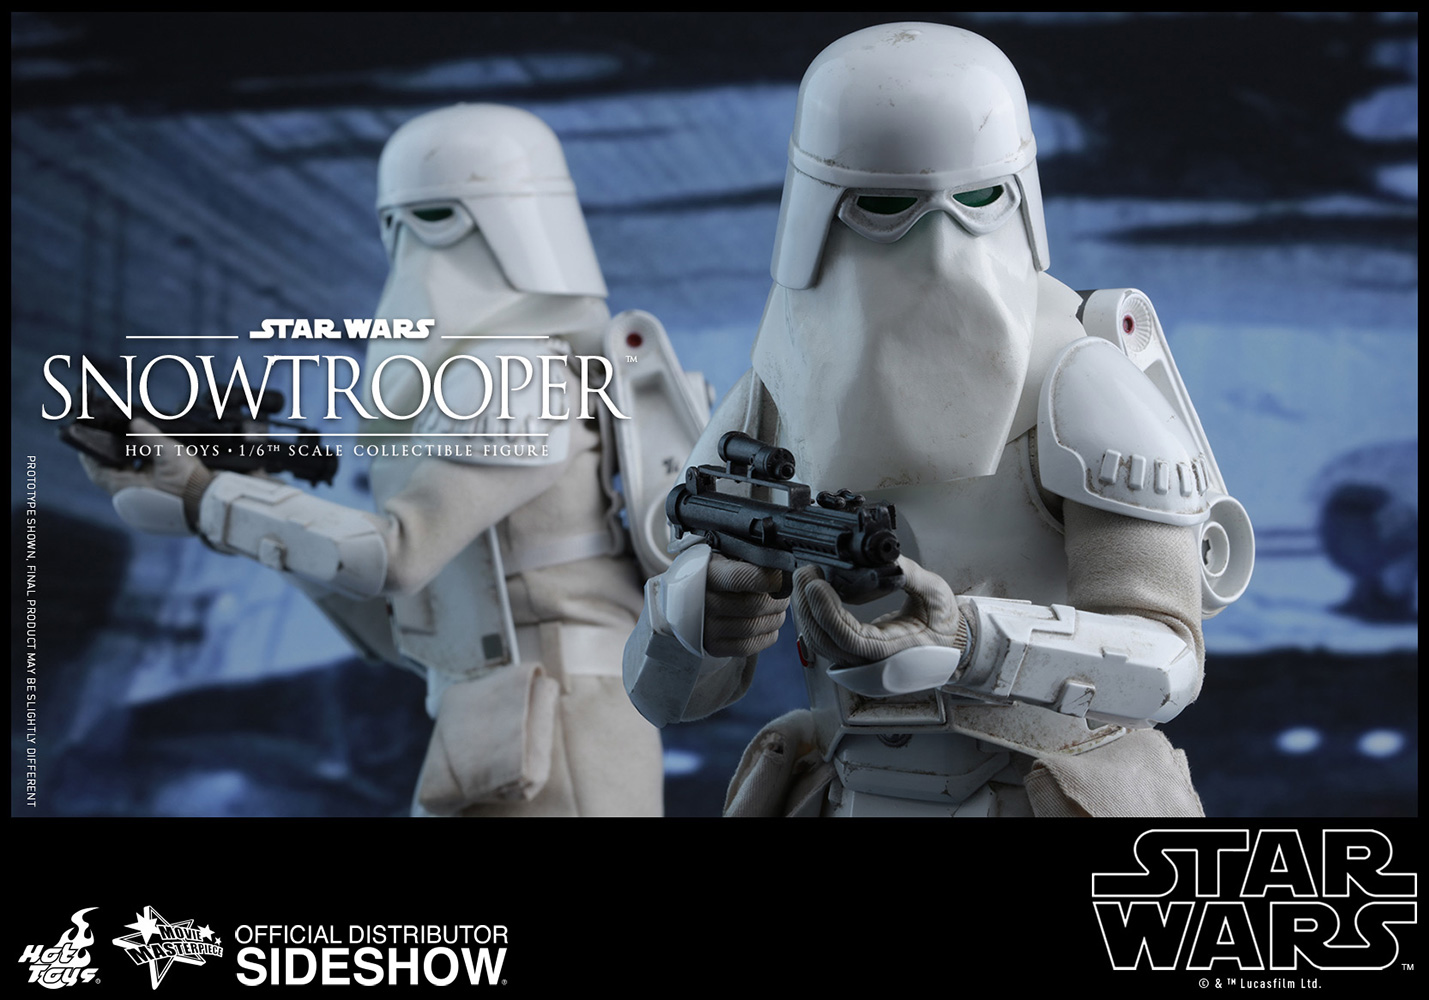 The-Empire-Strikes-Back-Snowtrooper-figure-09